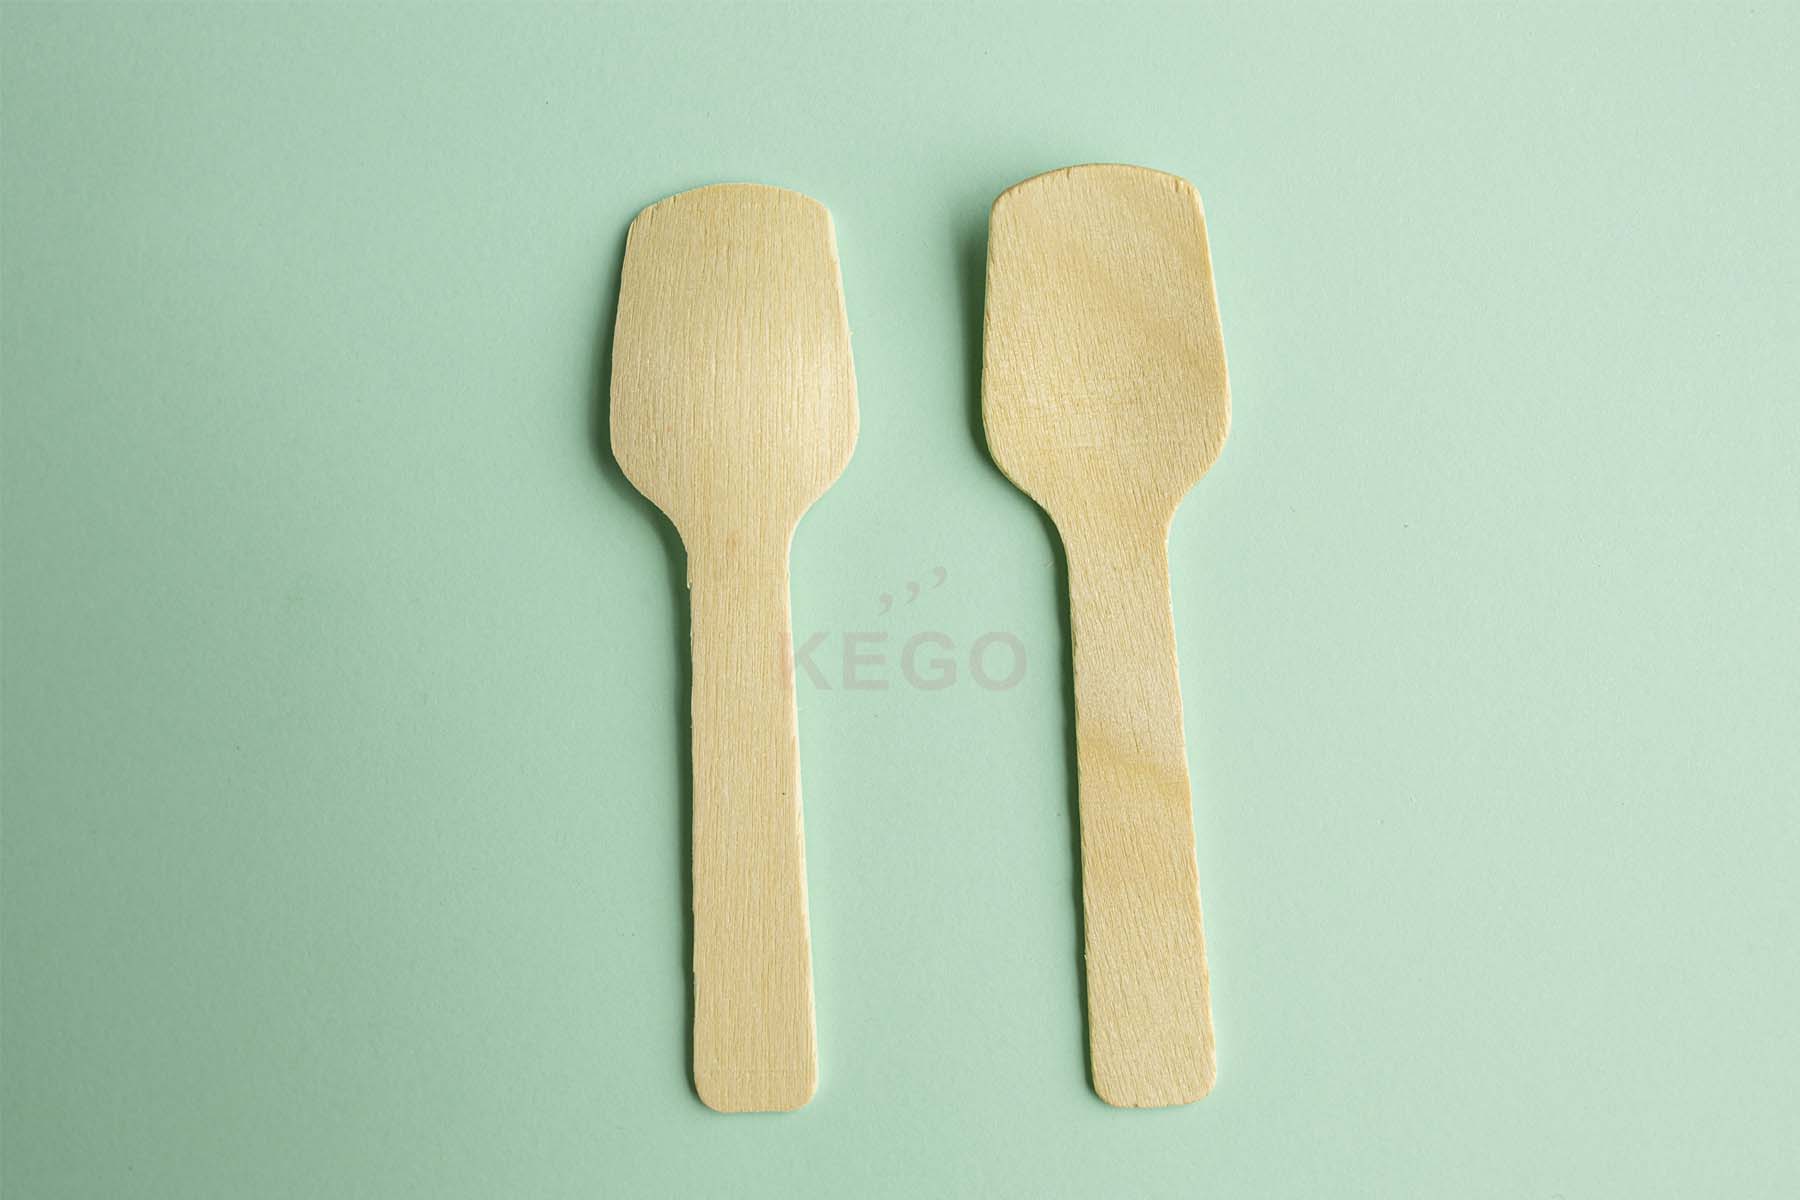 https://kego.com.vn/wp-content/uploads/2015/09/disposable-wooden-spoon-6.jpg